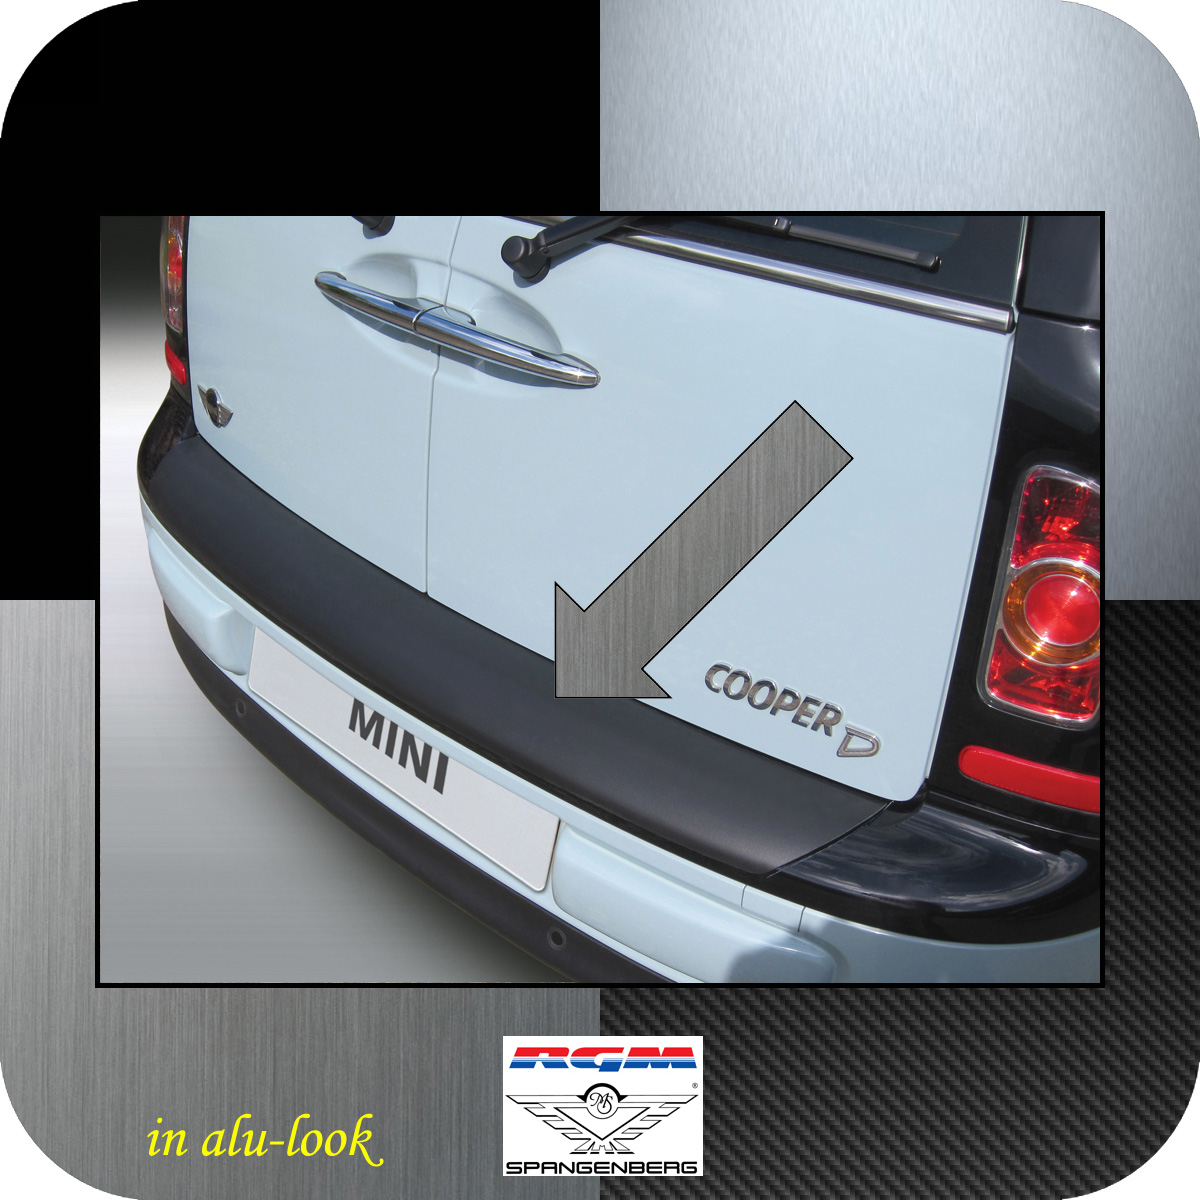 Ladekantenschutz Alu-Look Mini BMW Clubman I R55 Kombi Bj 2007-2015 3504103